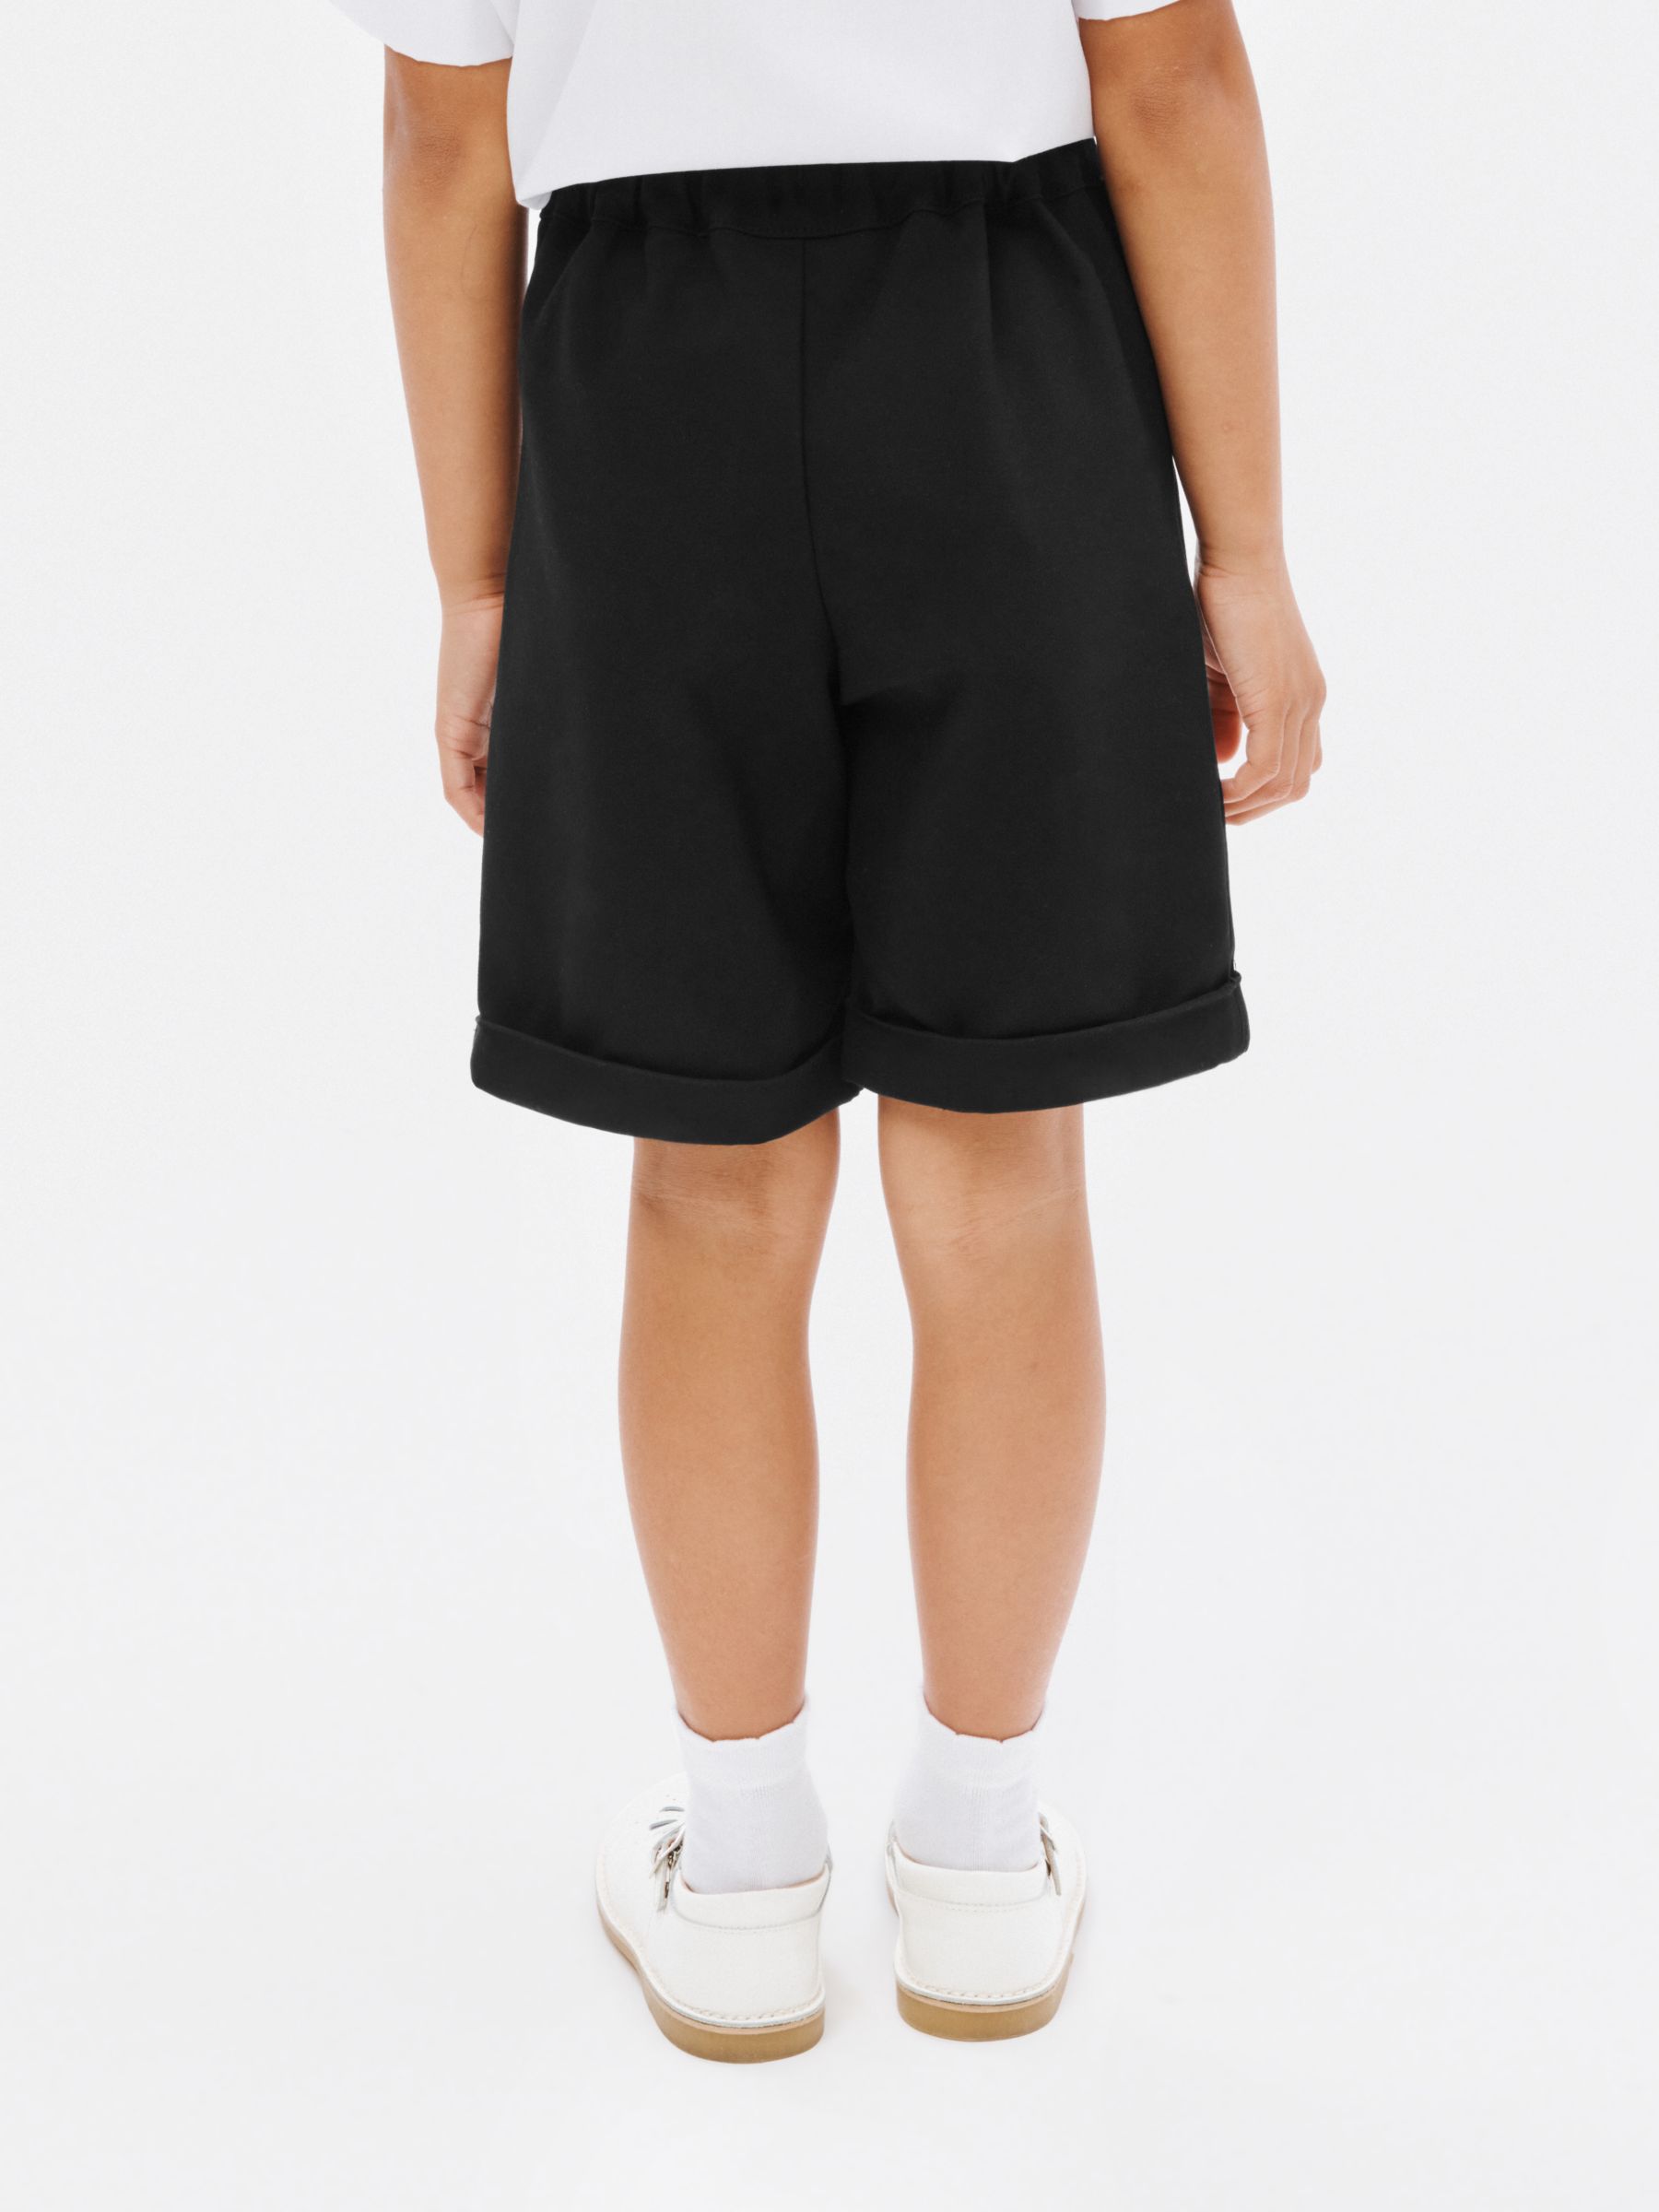 John Lewis Girls' Adjustable Waist City School Shorts, Black at